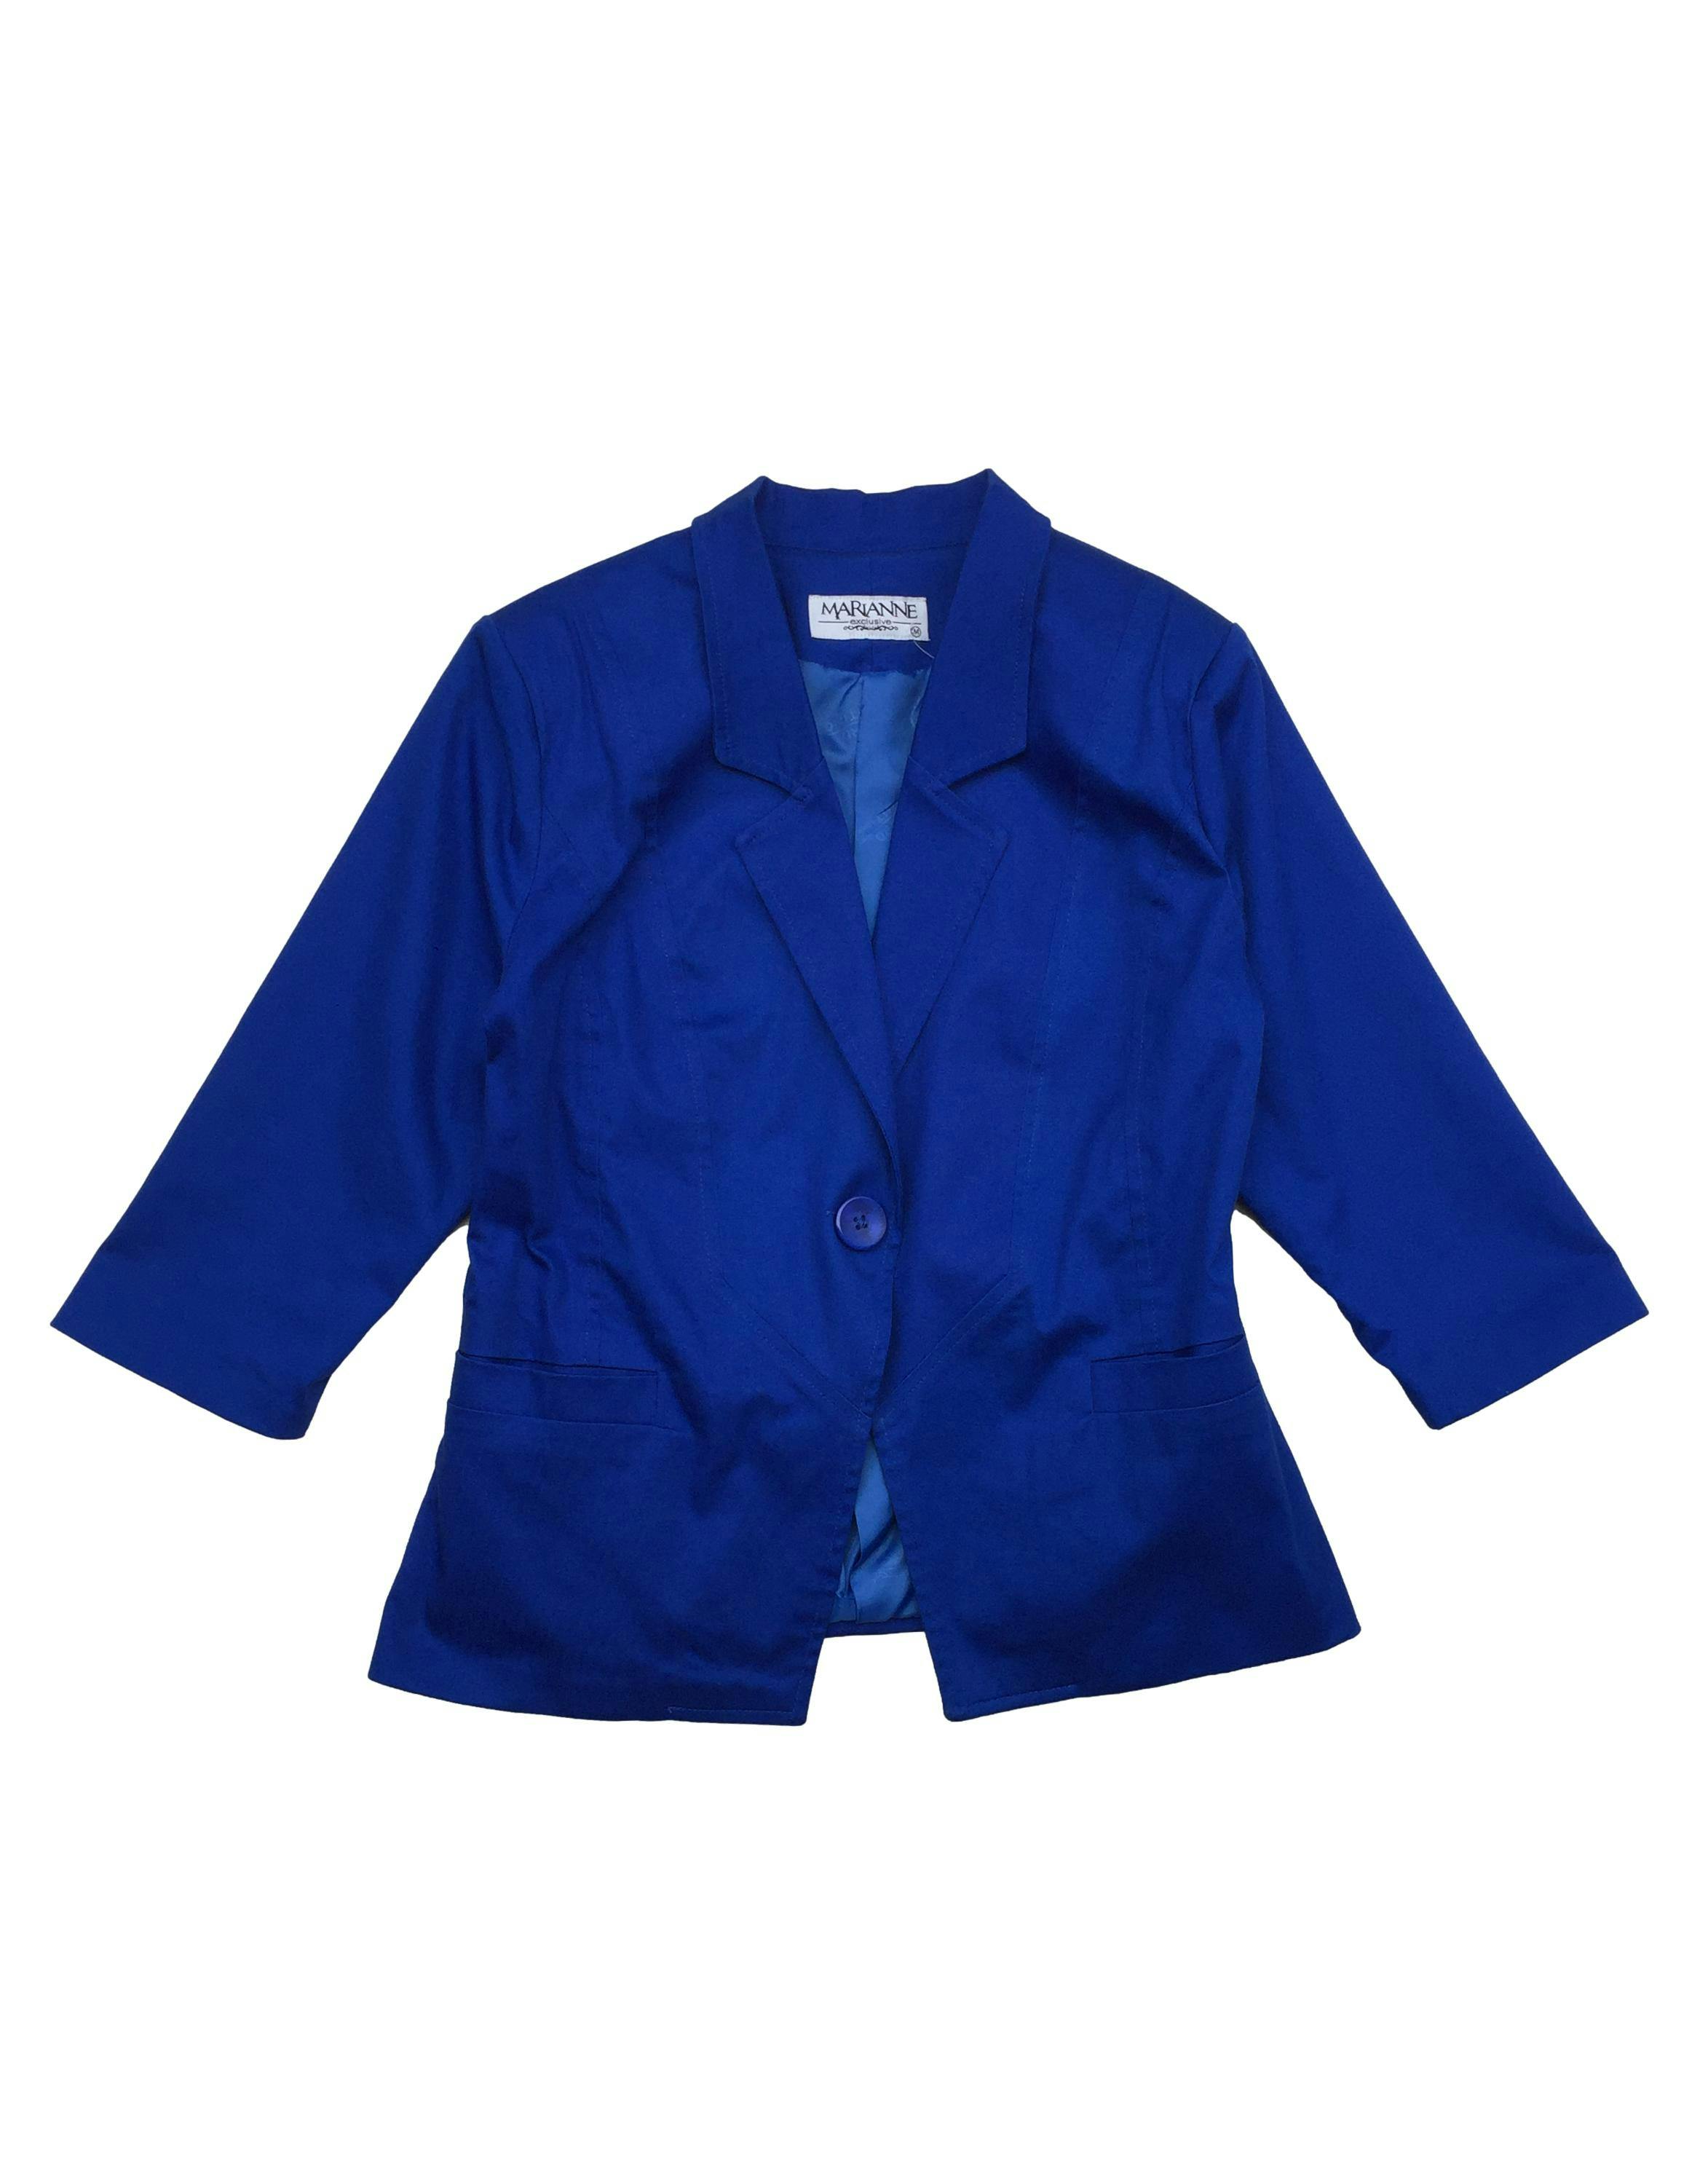 Blazer azulino corte princesa, modelo de un solo botón con forro, hombreras, bolsillos y mangas 3/4. Busto 100cm, Largo 55cm.